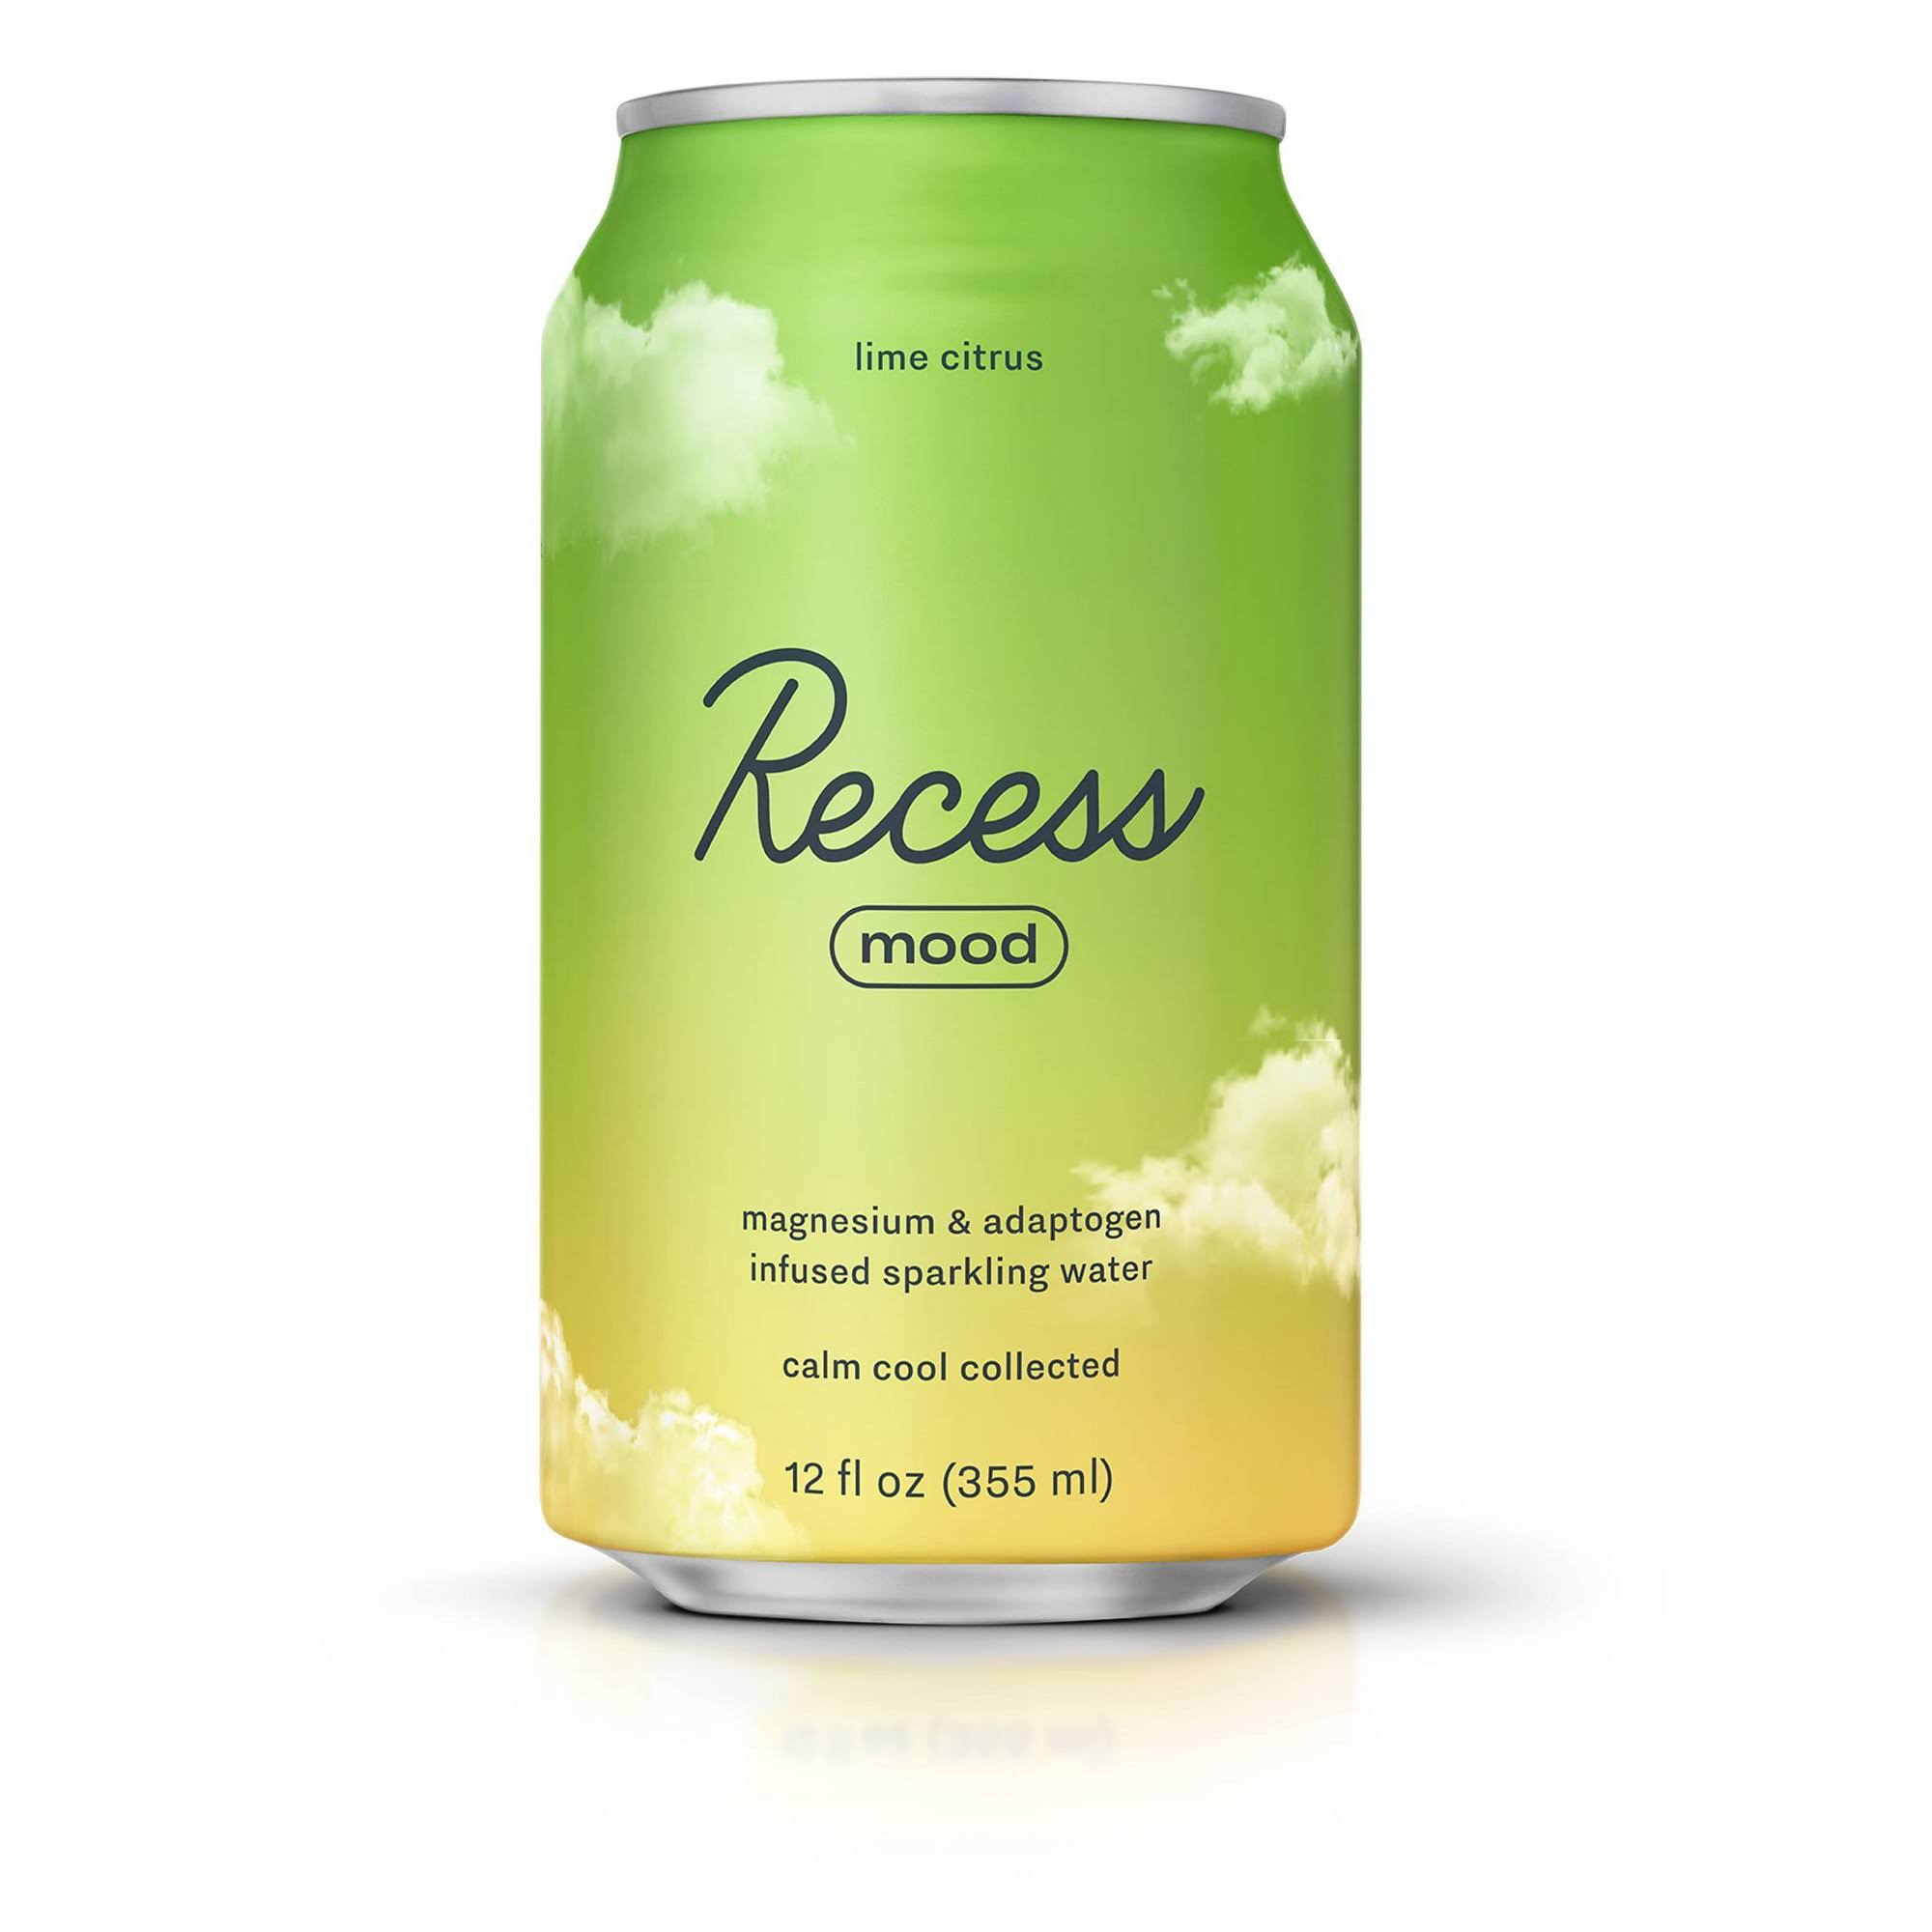 Recess Sparkling Water, Lime Citrus, Mood - 12 fl oz